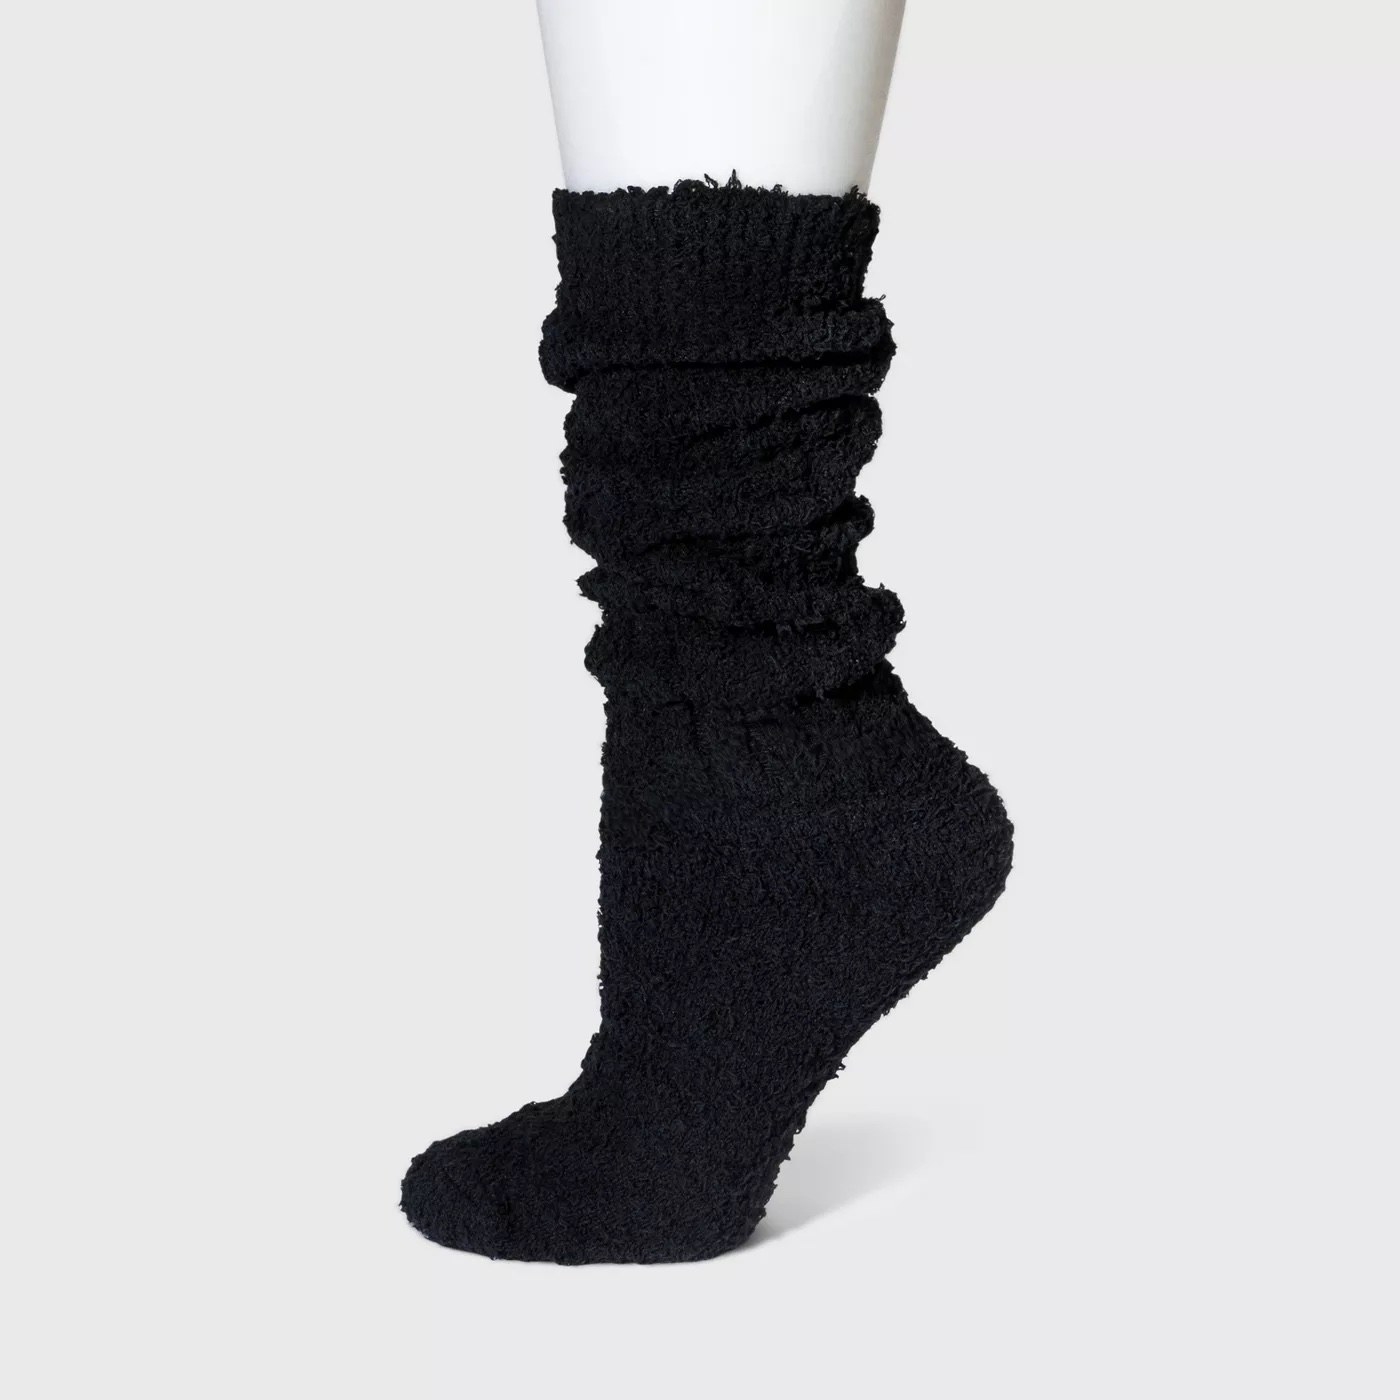 A black fuzzy sock